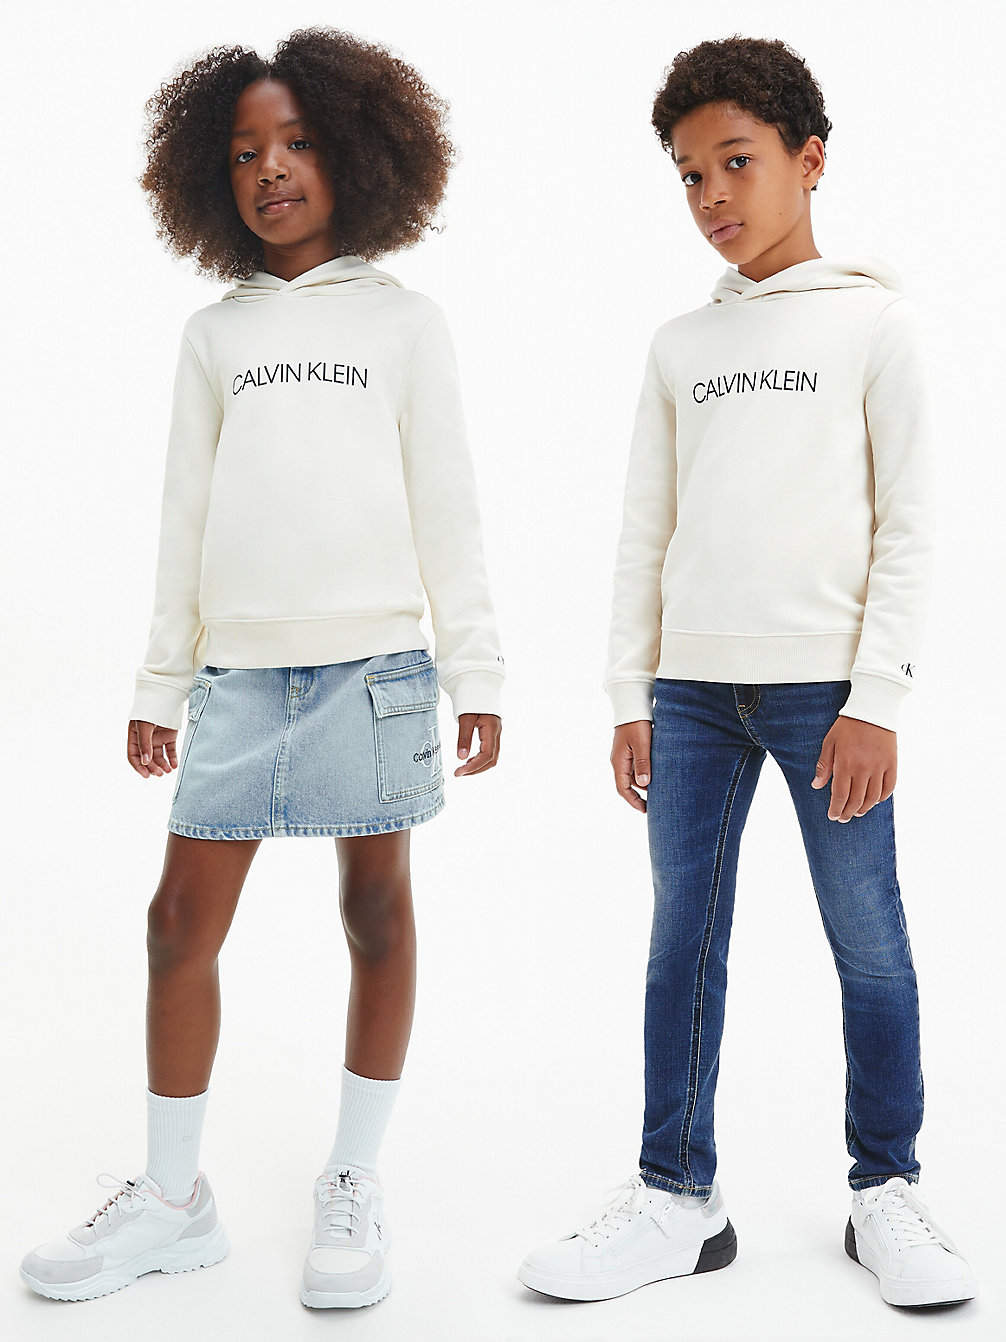 MUSLIN > Худи унисекс с логотипом > undefined kids unisex - Calvin Klein